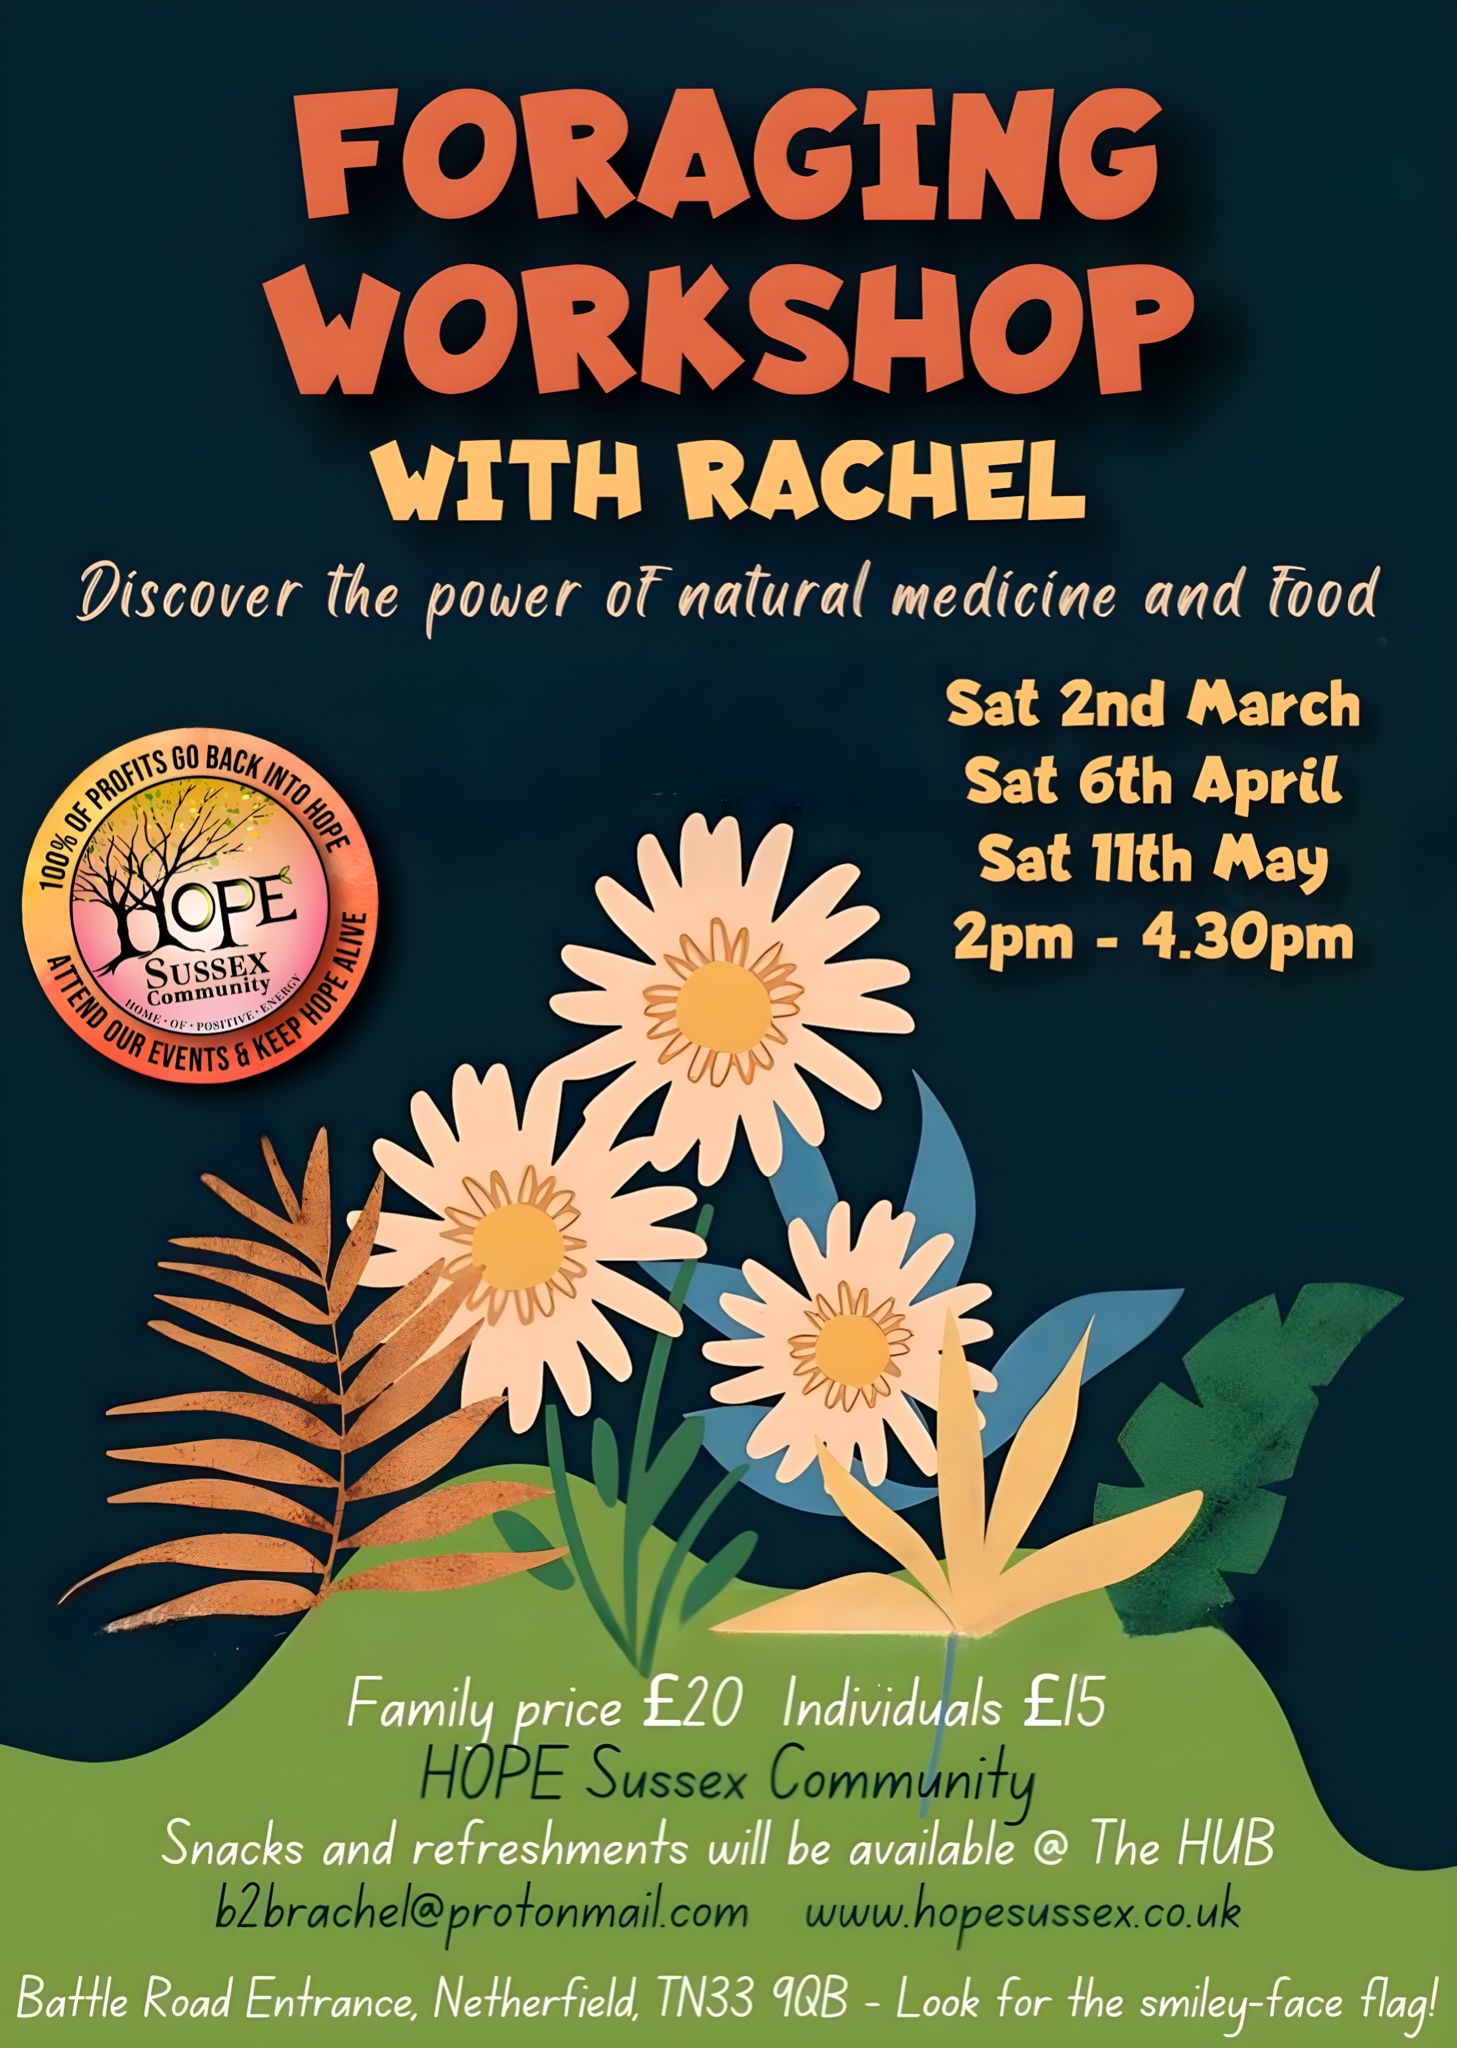 Food Foraging Workshop with Rachel | HOPE Sussex Community